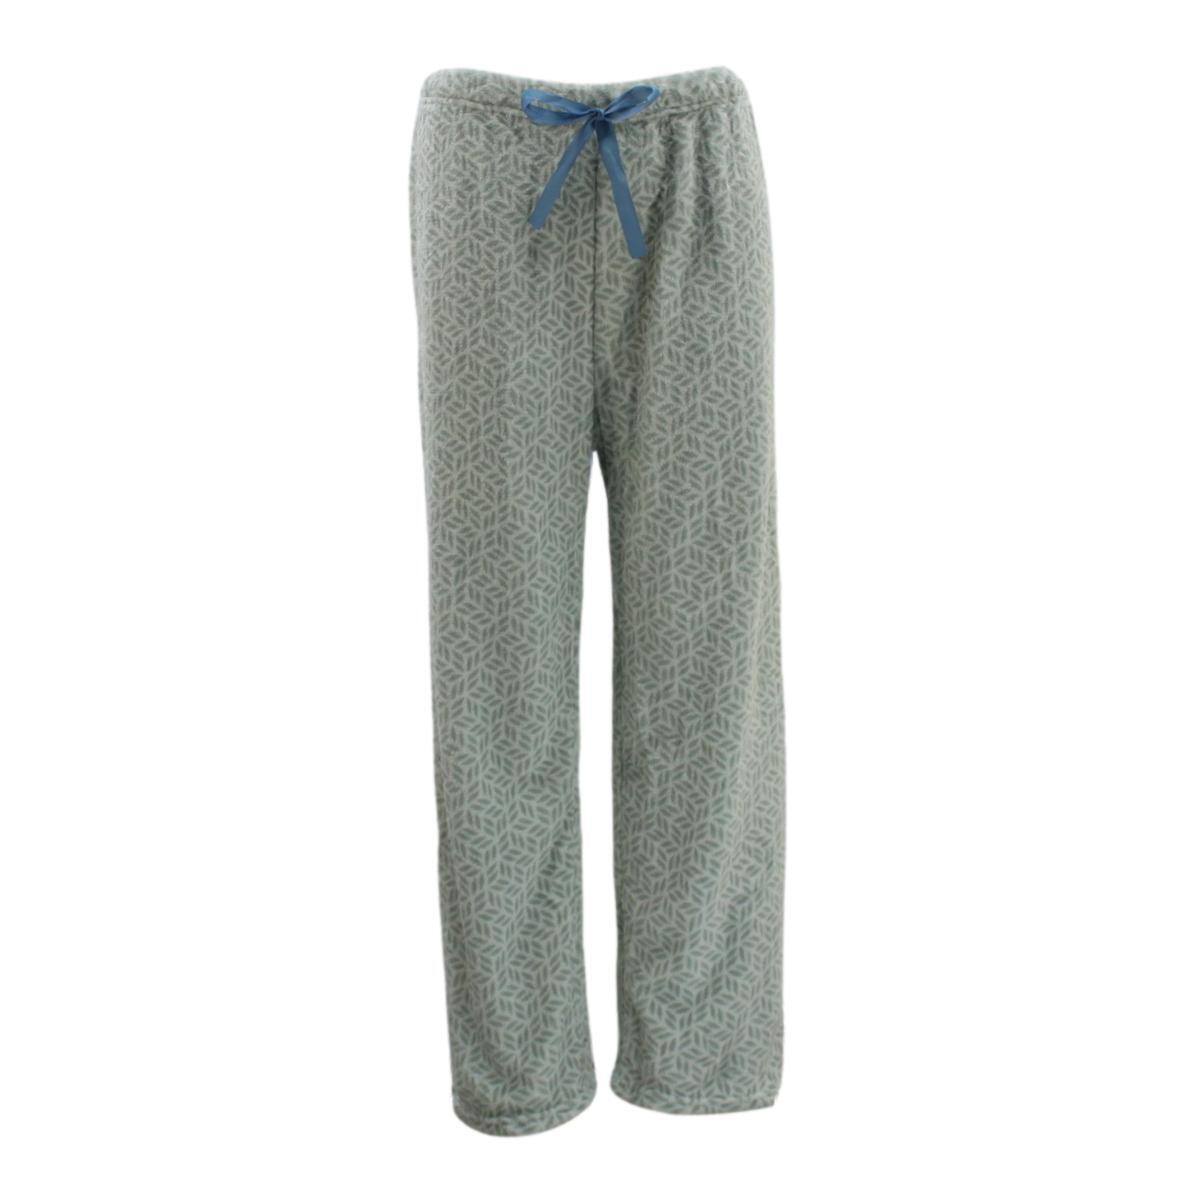 Women's Soft Plush Lounge Sleep Pyjama Pajama Pants Fleece Winter Sleepwear